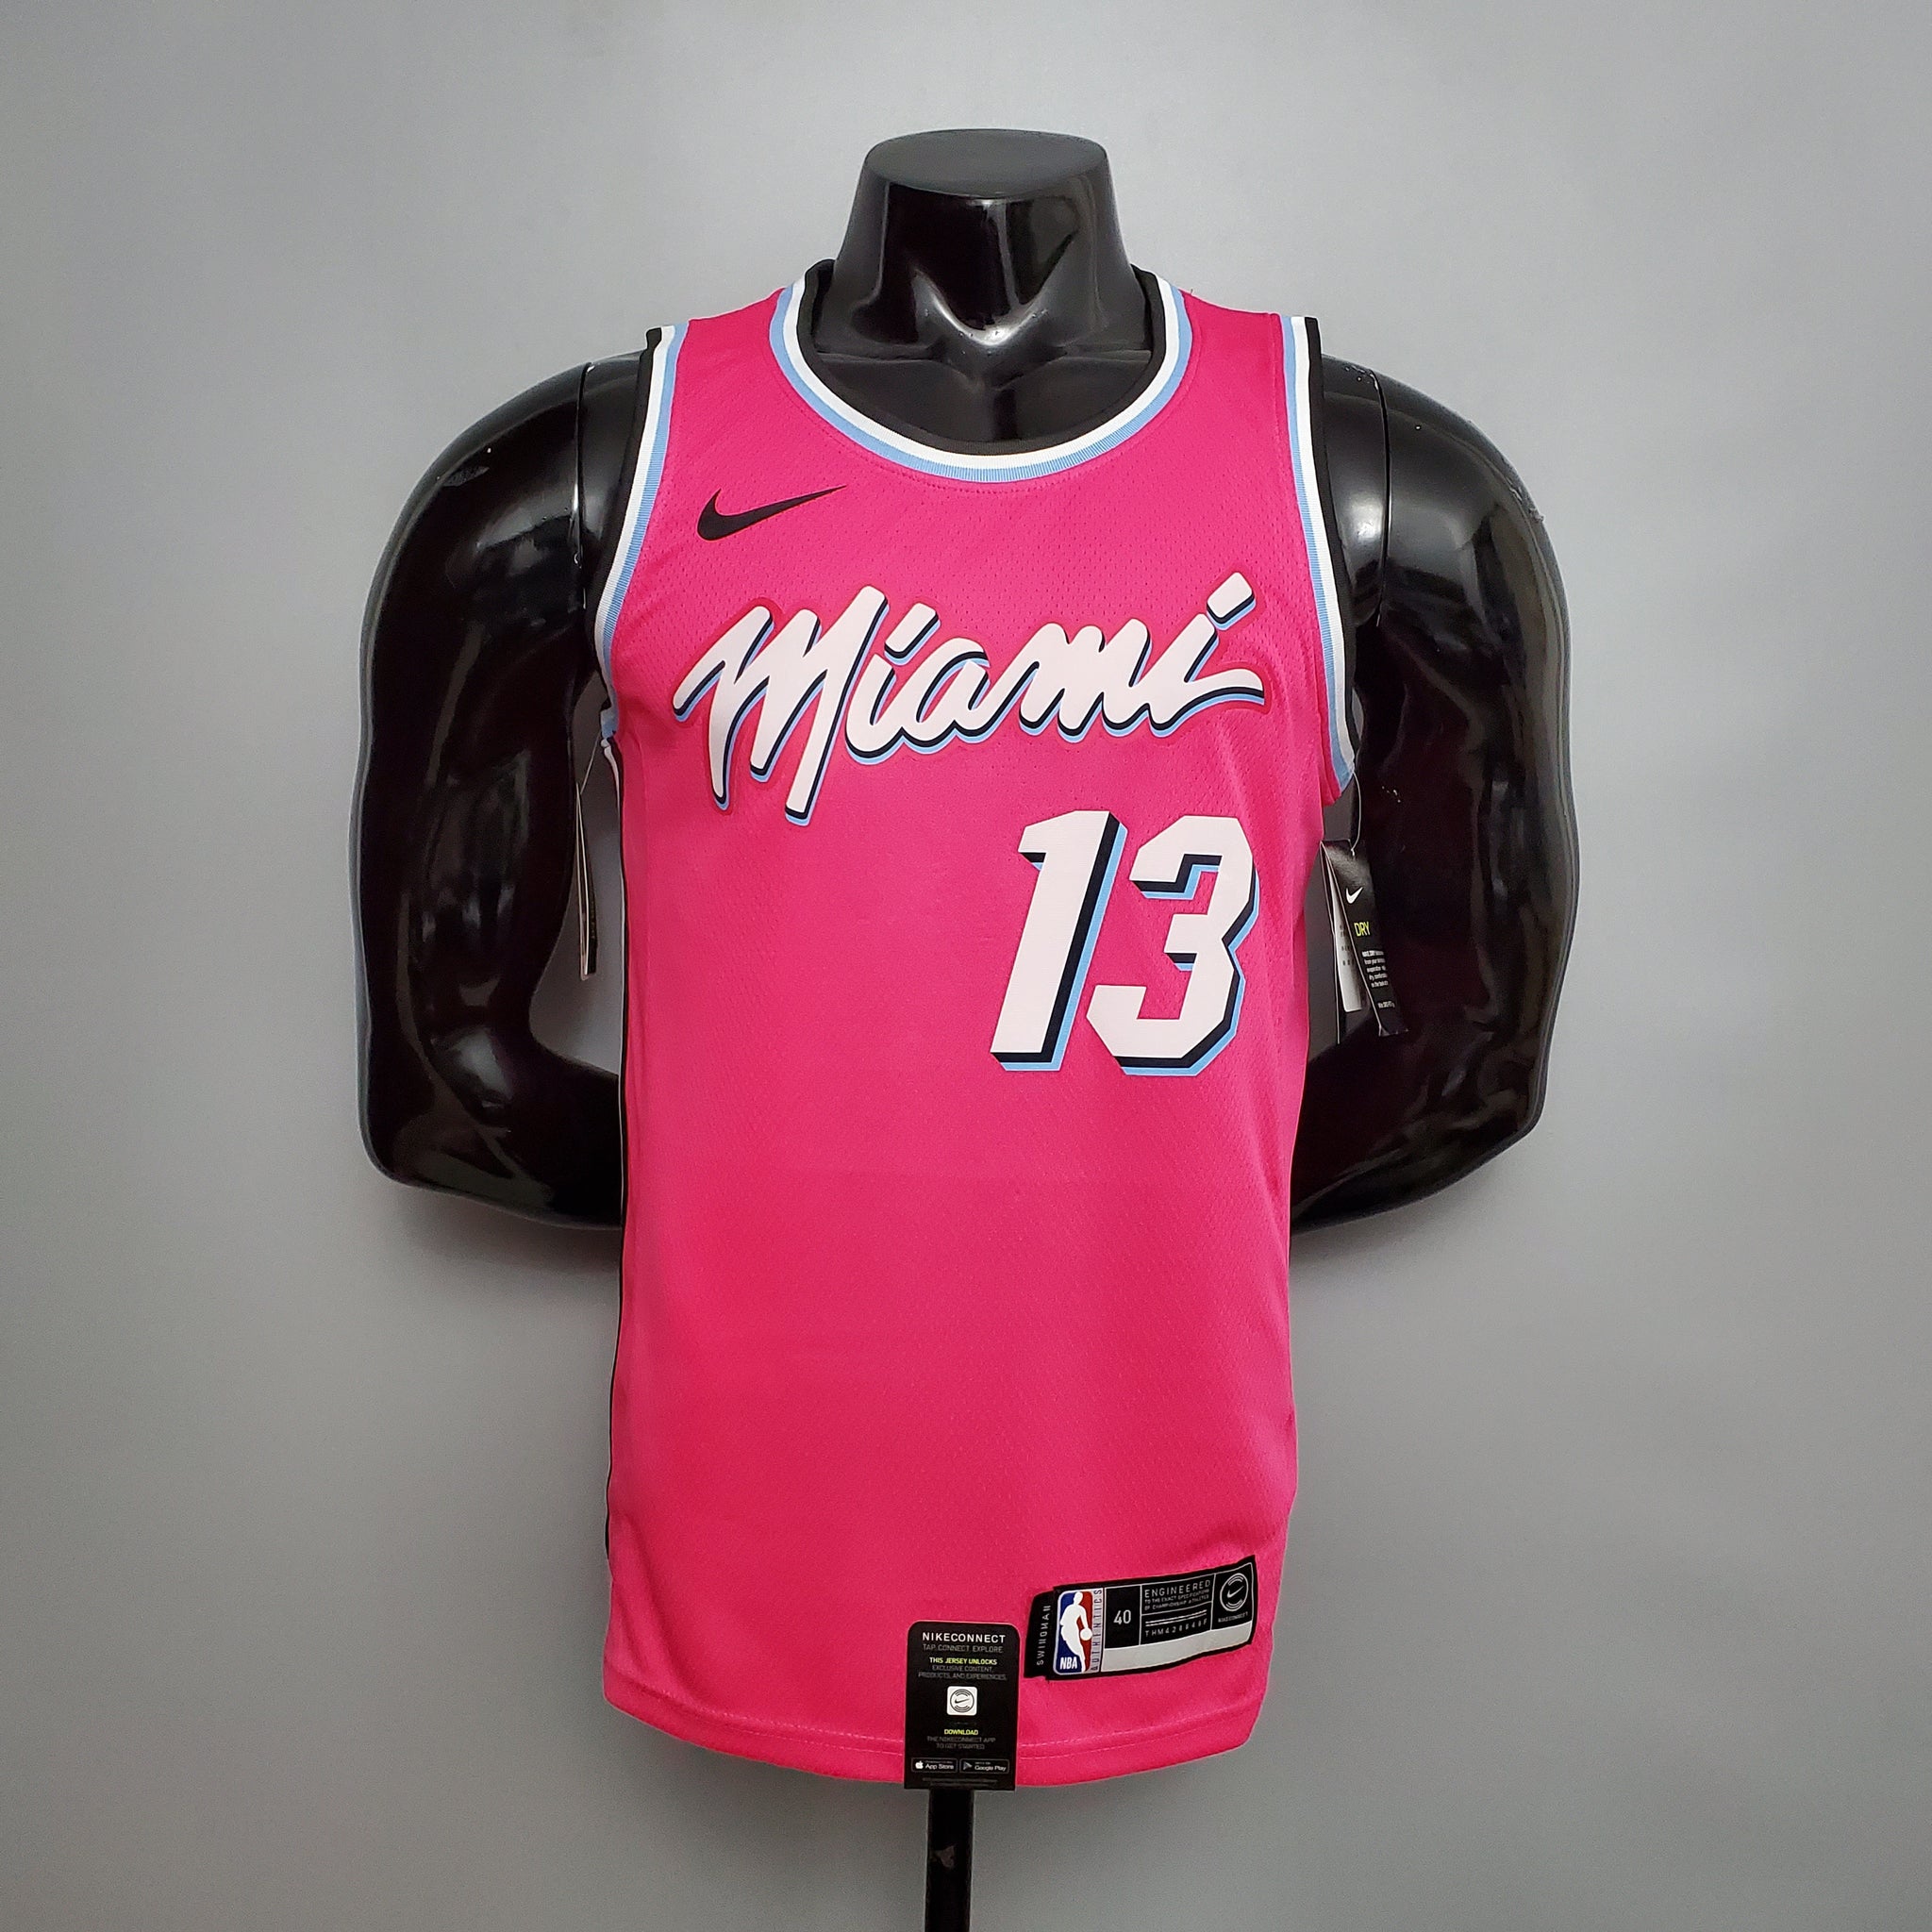 Regata NBA Nike Swingman - Miami Heat Branca - Wade #3